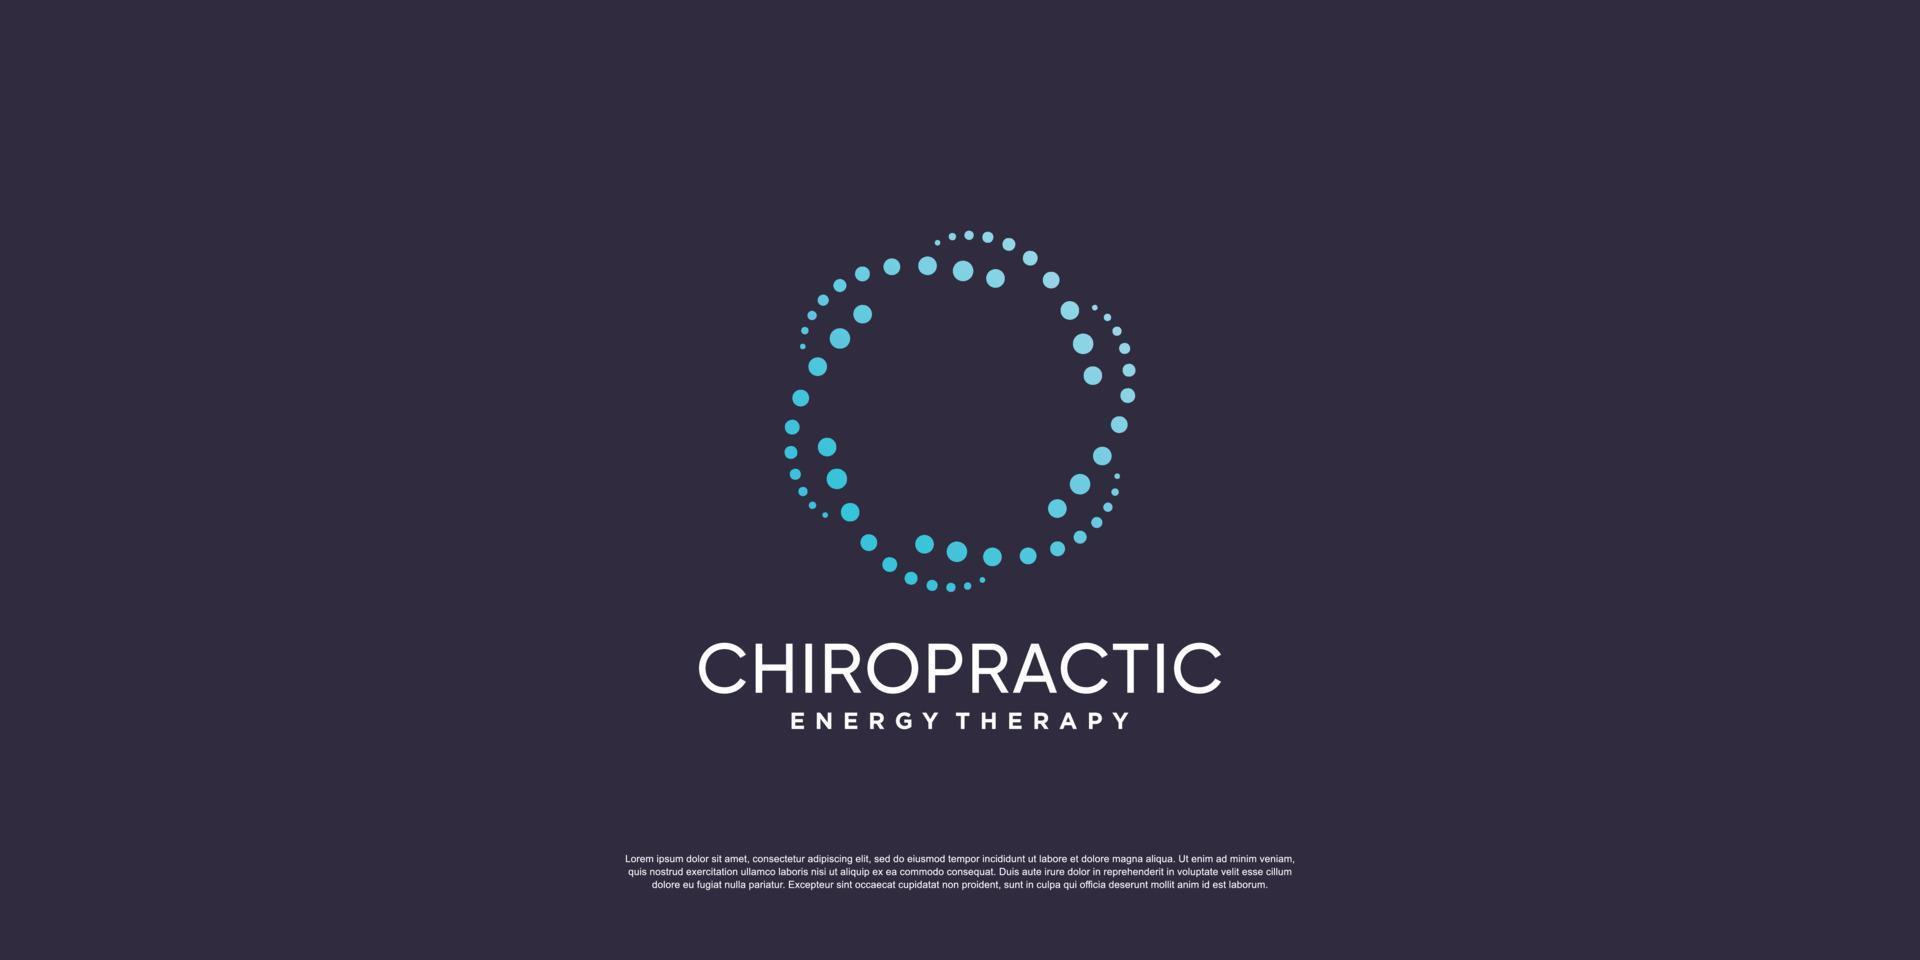 Chiropractic logo with creative element concept Premium Vector part 1